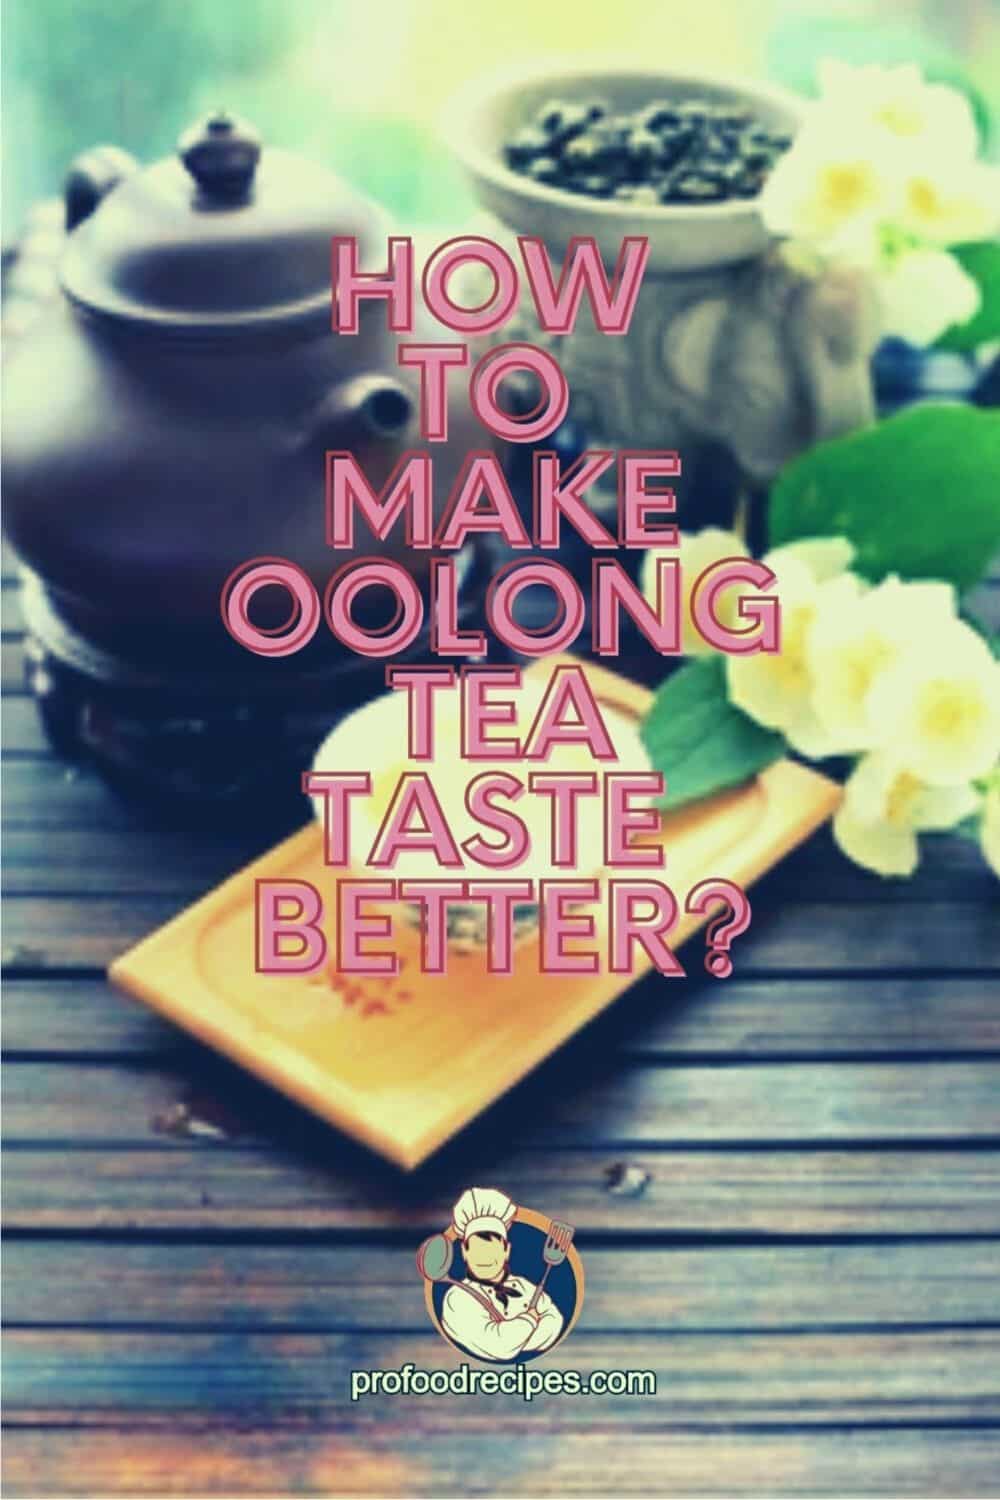 How to Make Oolong Tea Taste Better: 5 Delicious Oolong Tea Recipes